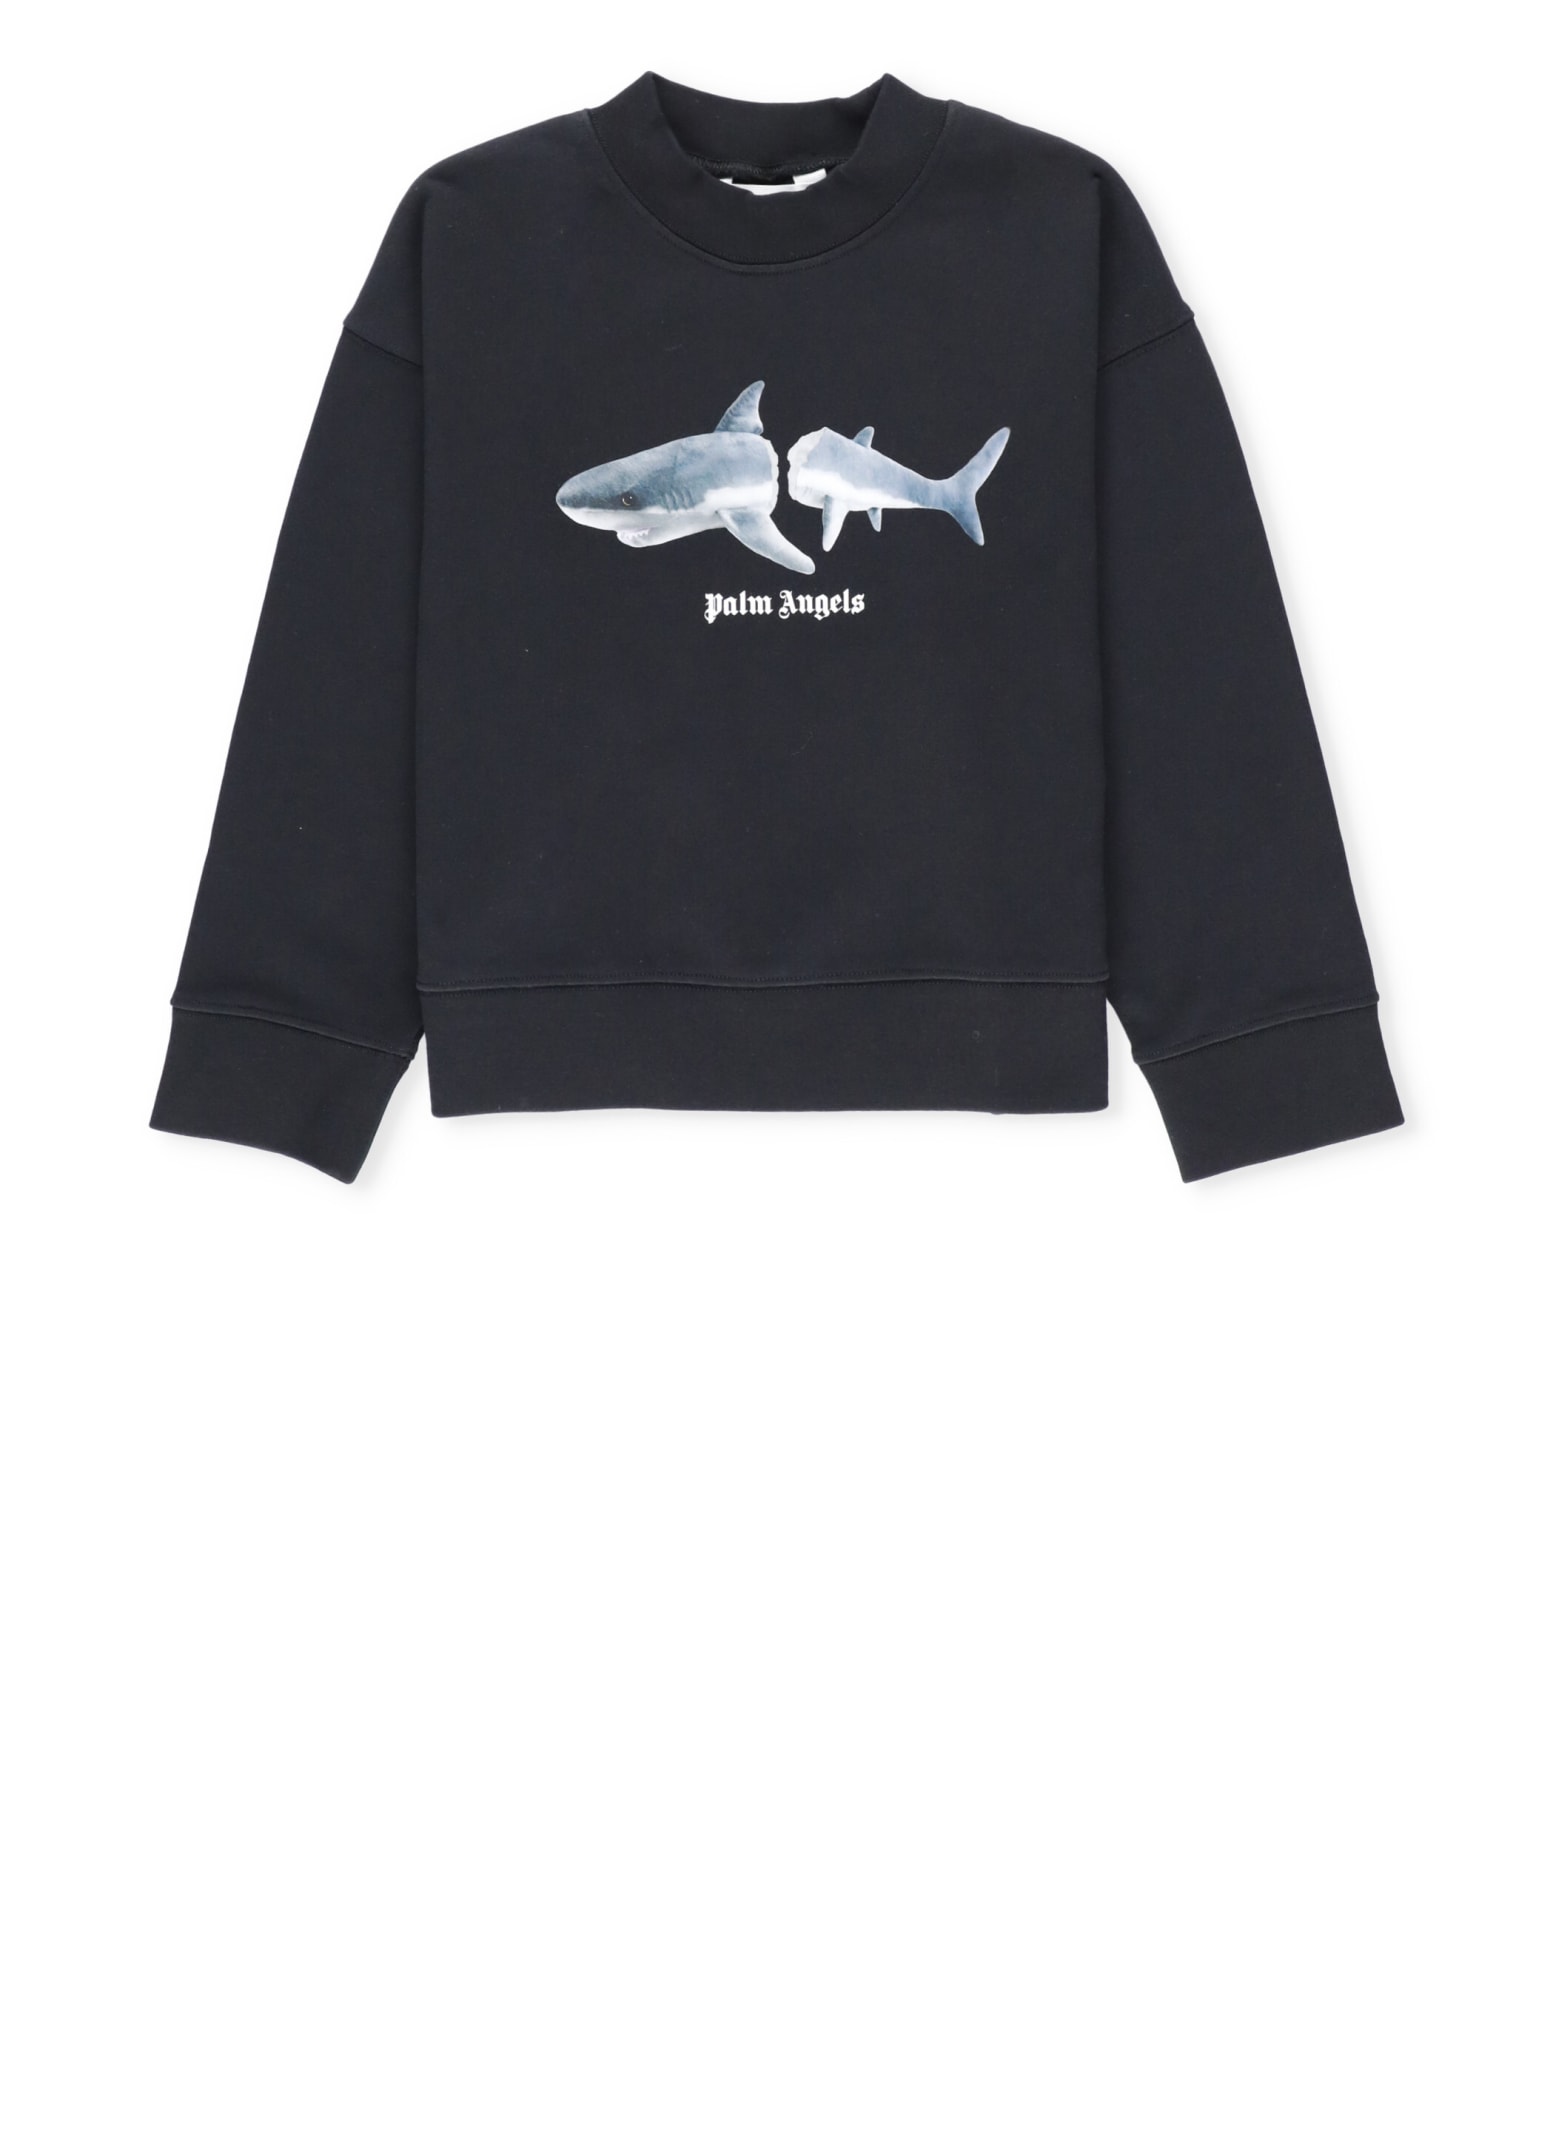 Palm Angels Shark Printed Sweatshirt